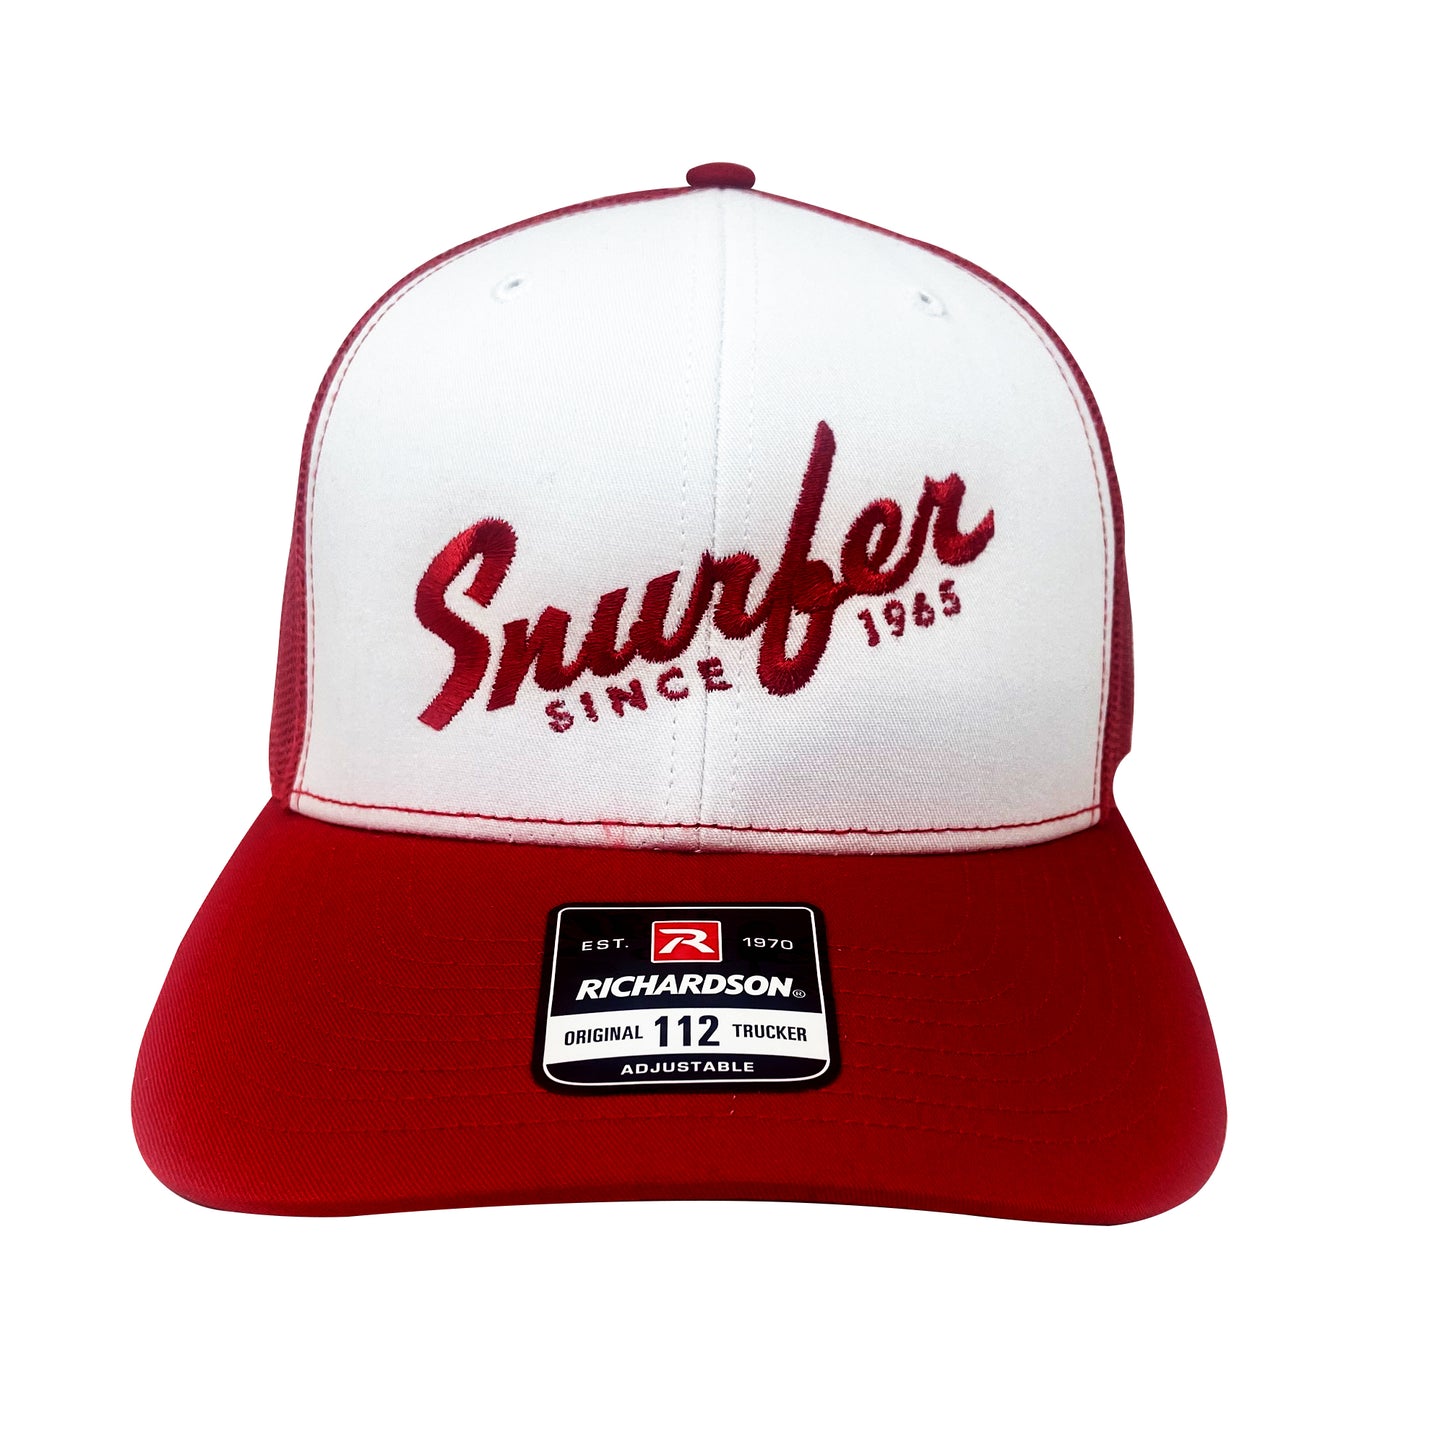 Snurfer Hat